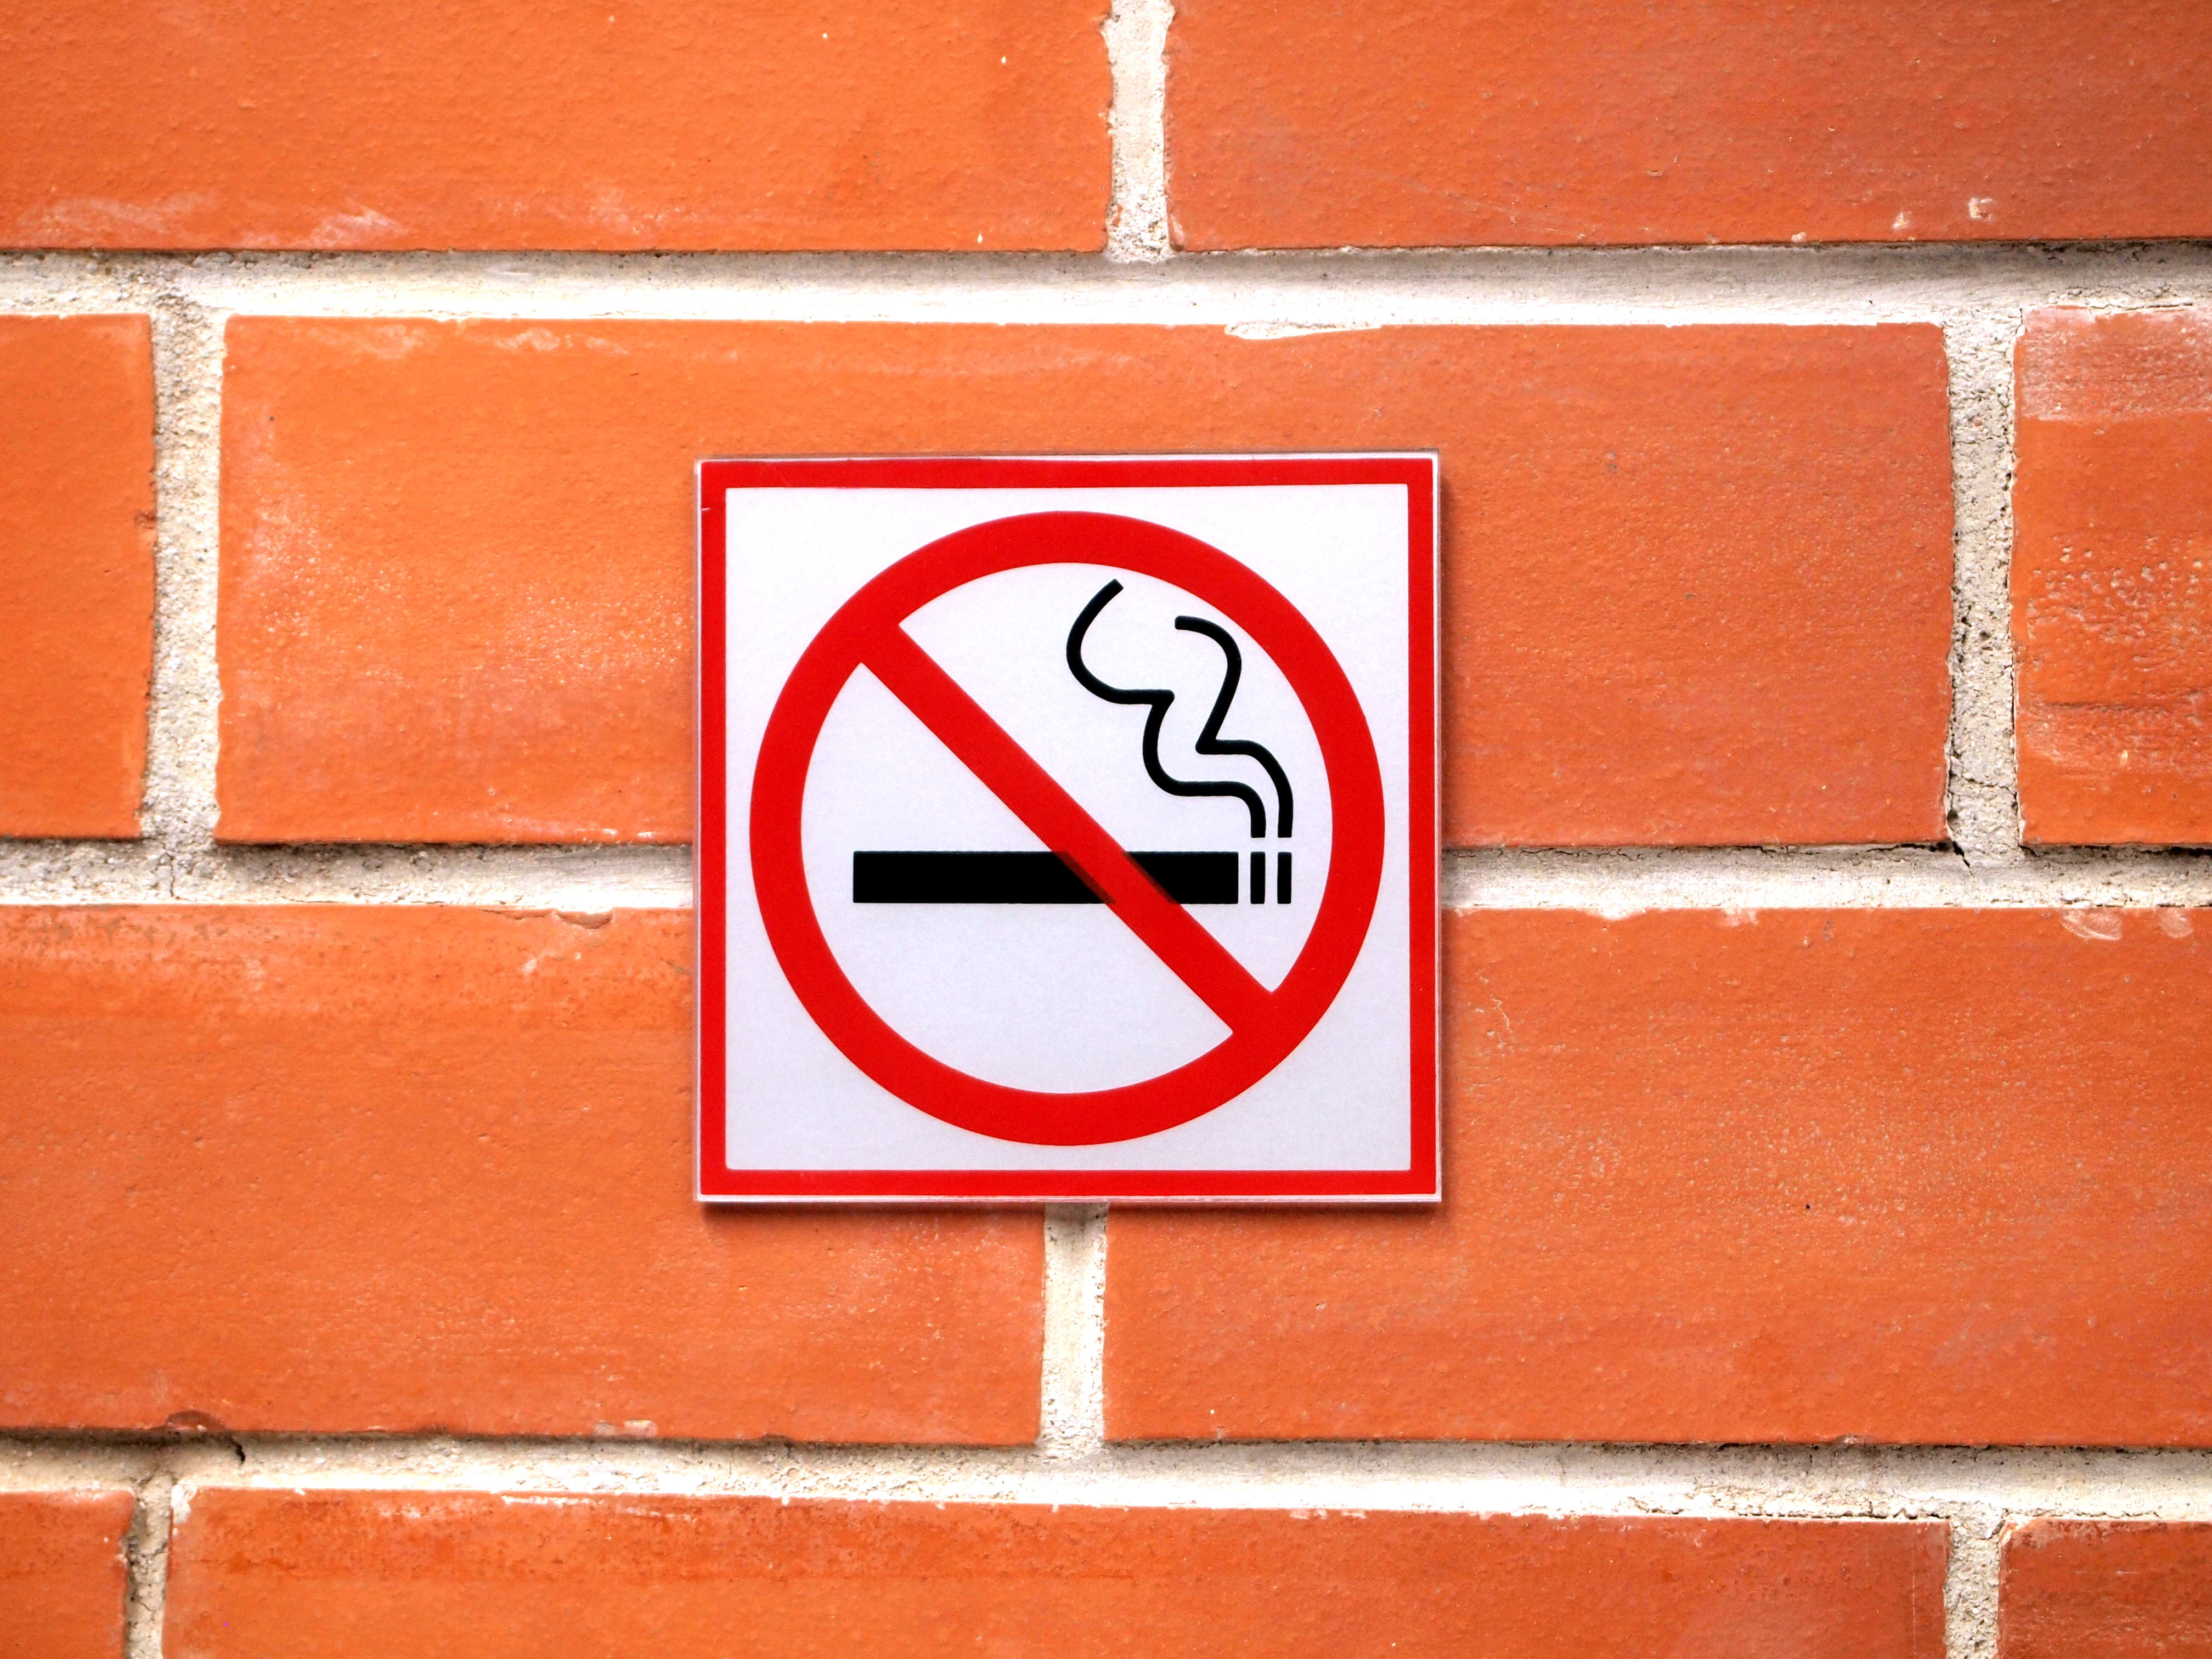 A No smoke sign placed on a brick wall